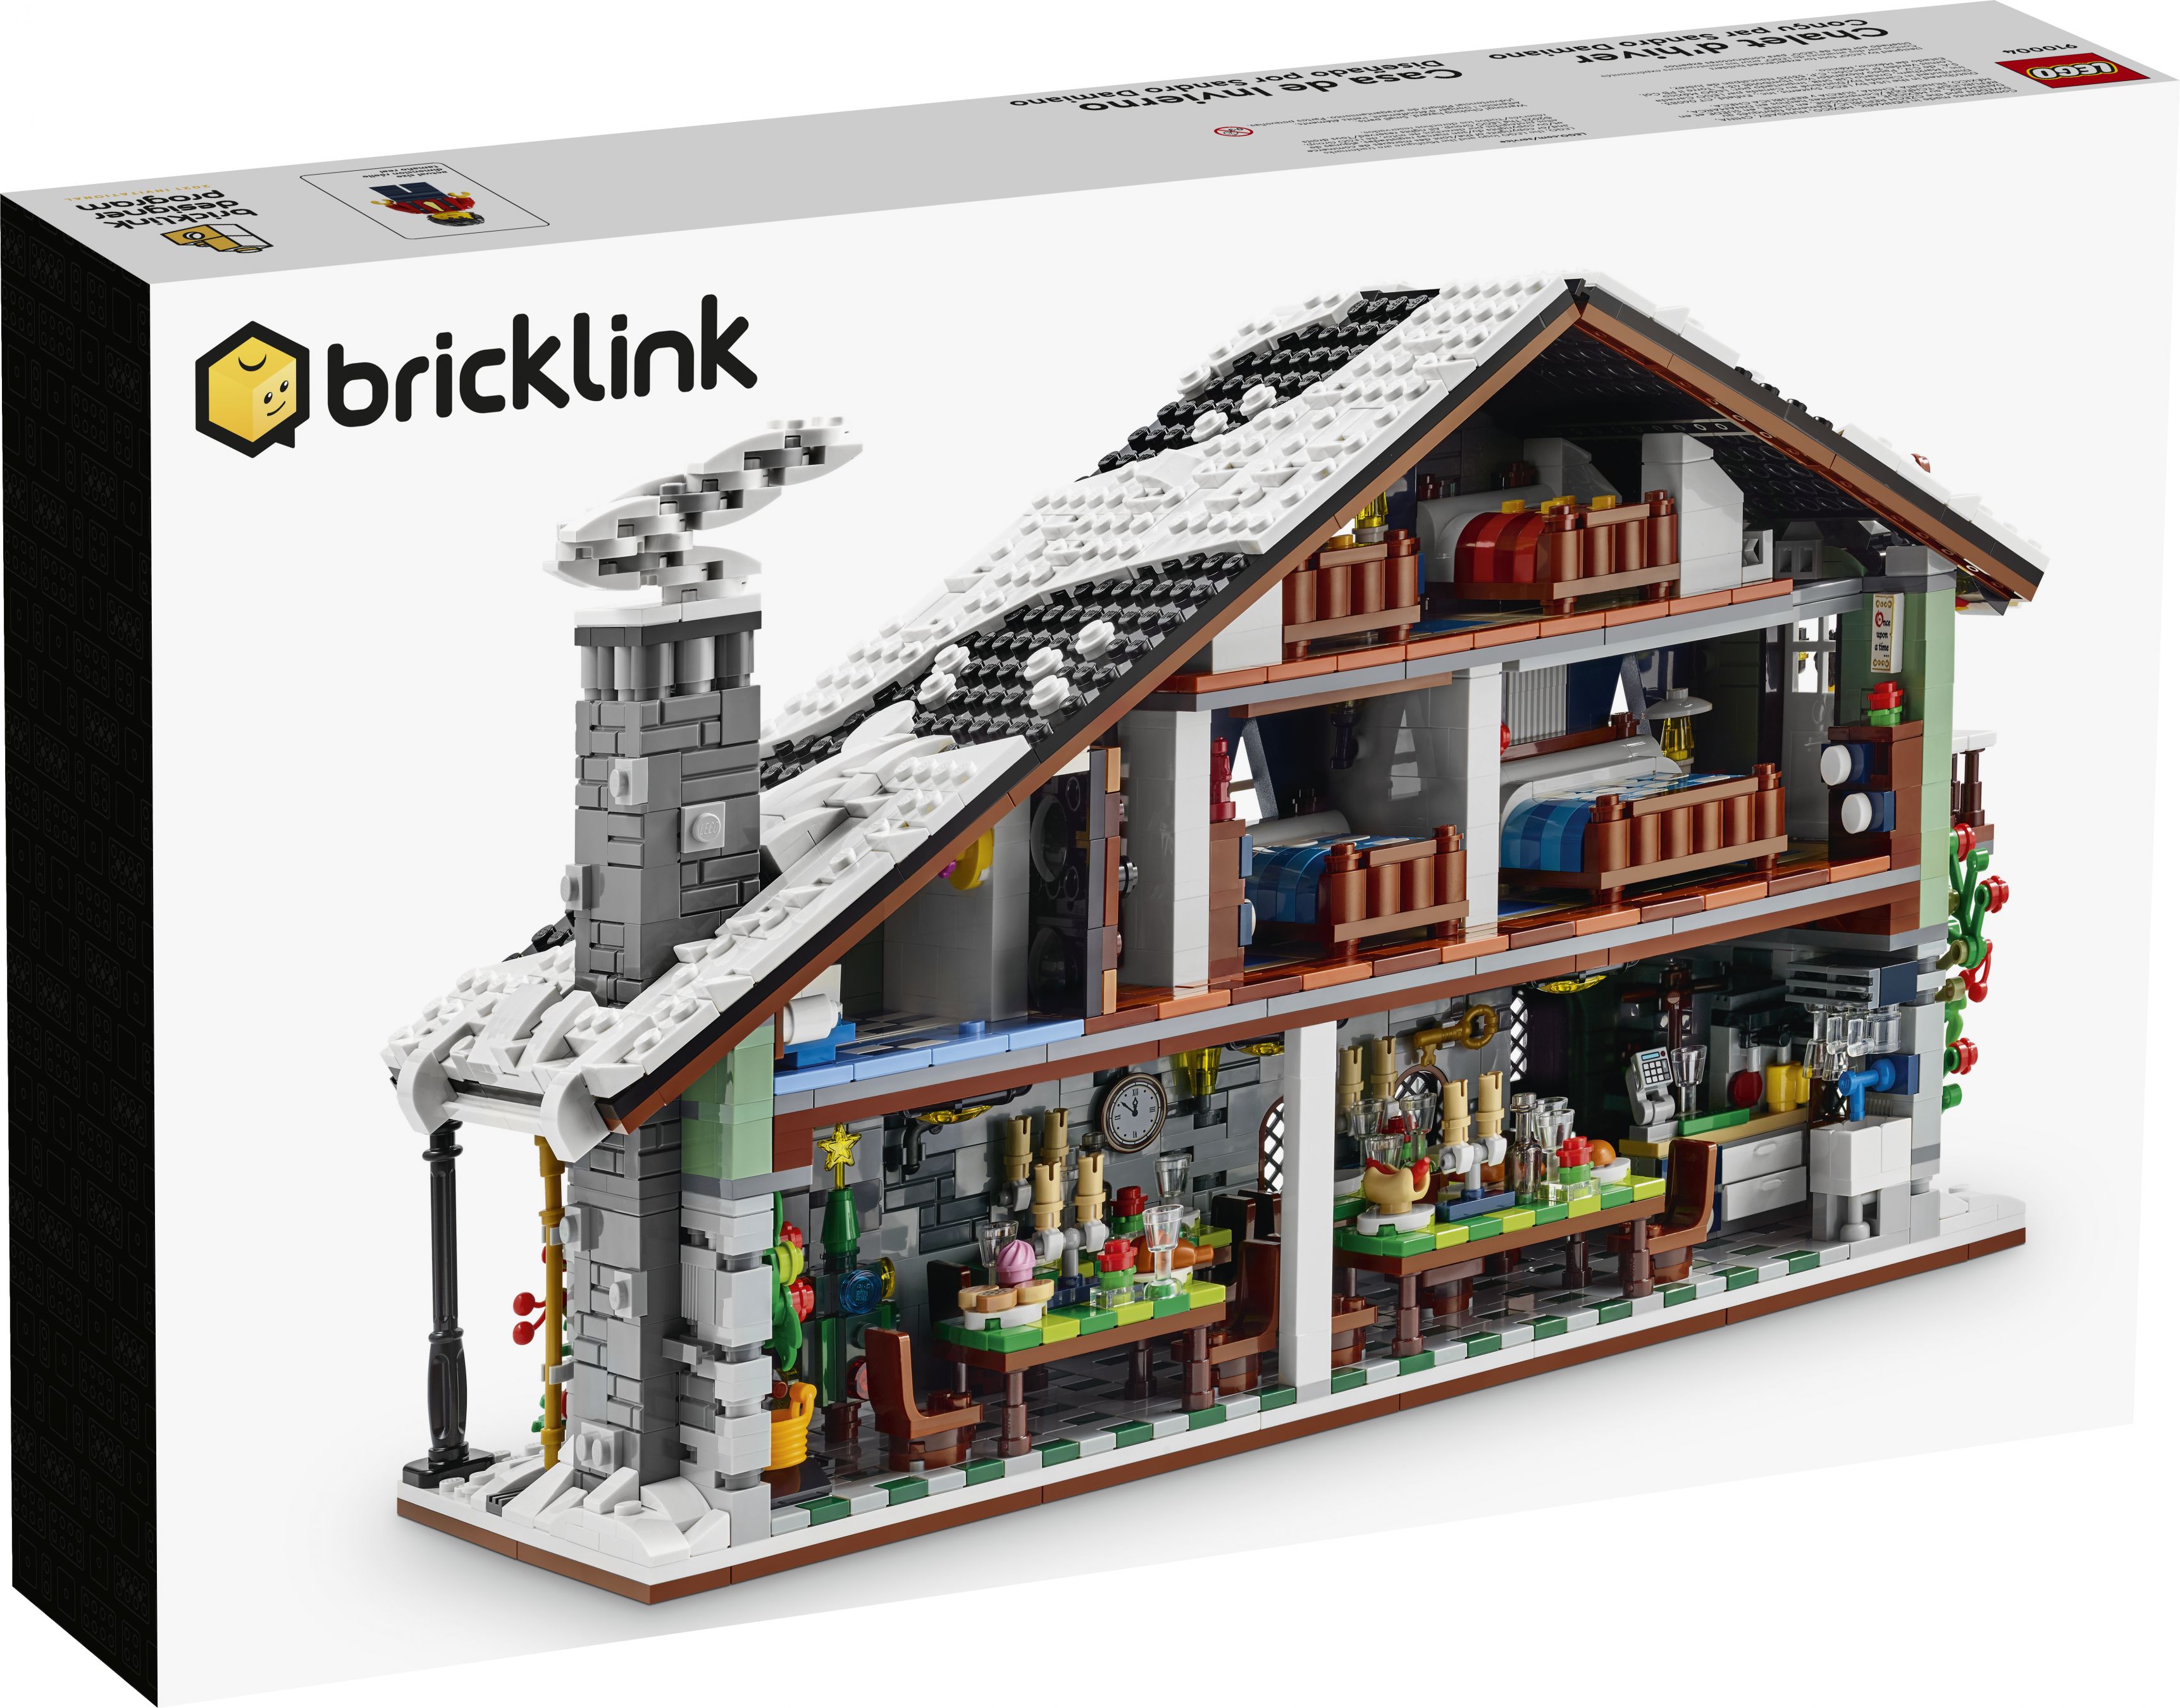 LEGO Bricklink 910004 Winterliche Almhütte LEGO_910004_Box5_v39.jpg